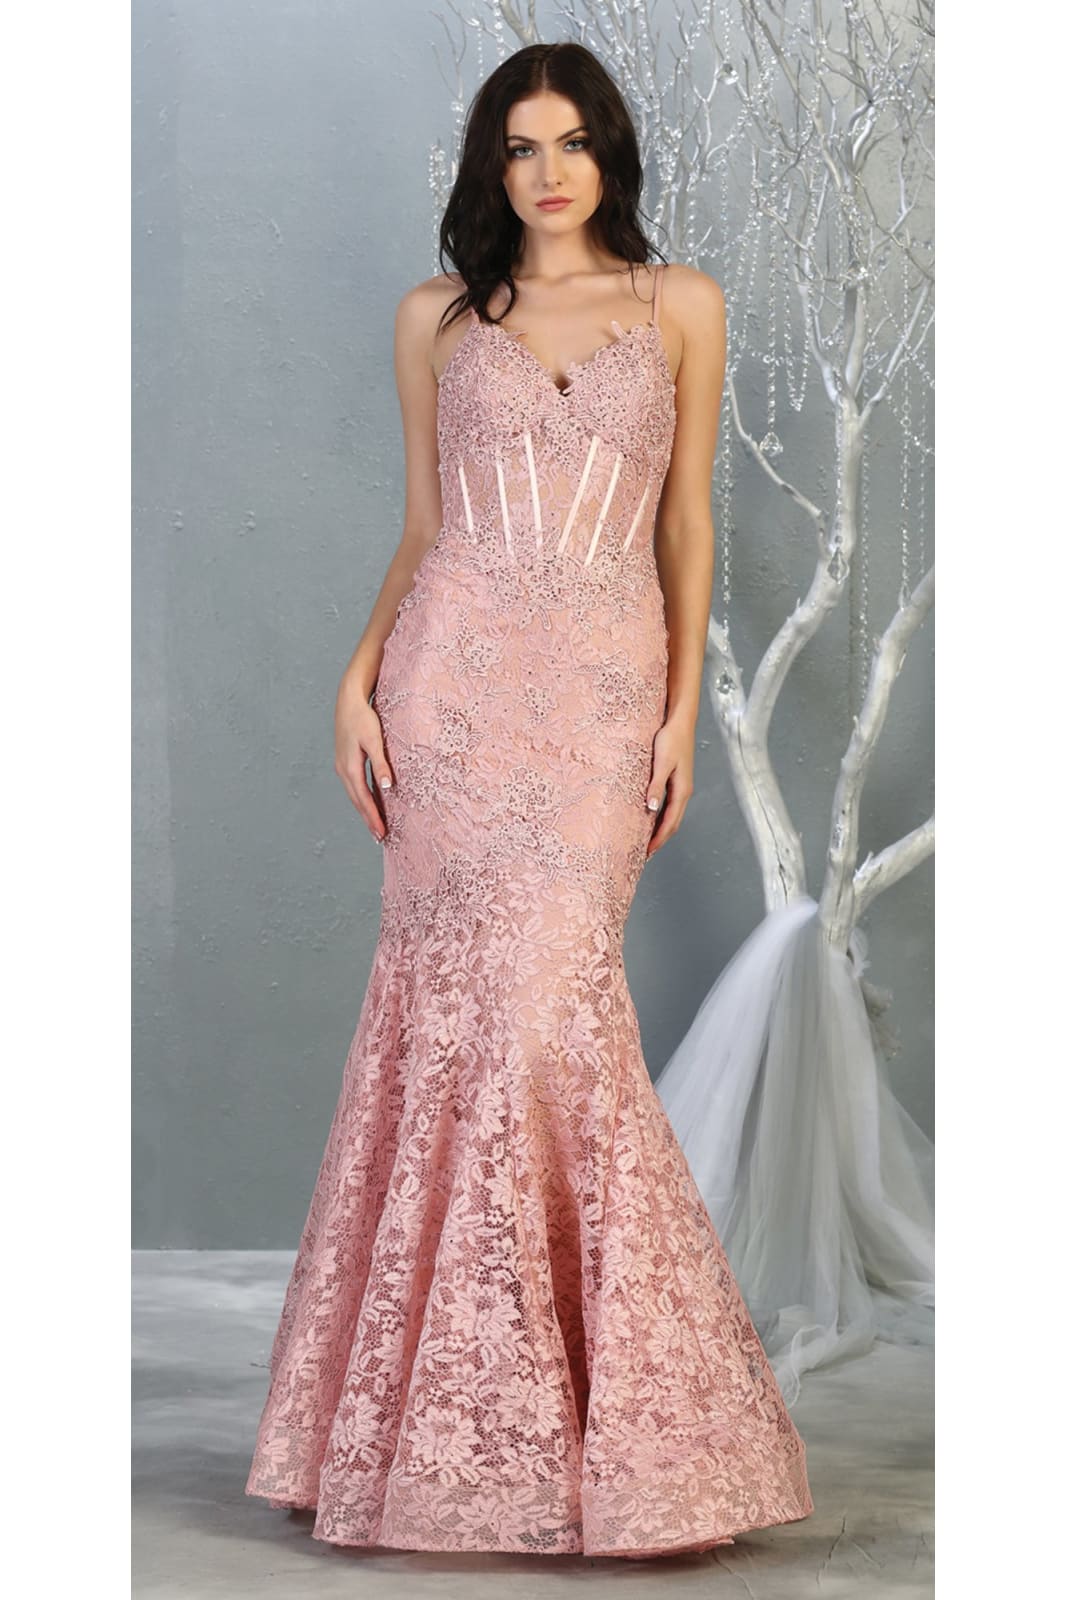 Lace Mermaid Evening Gown - LA7865 - Dusty Rose / 4 - Dress